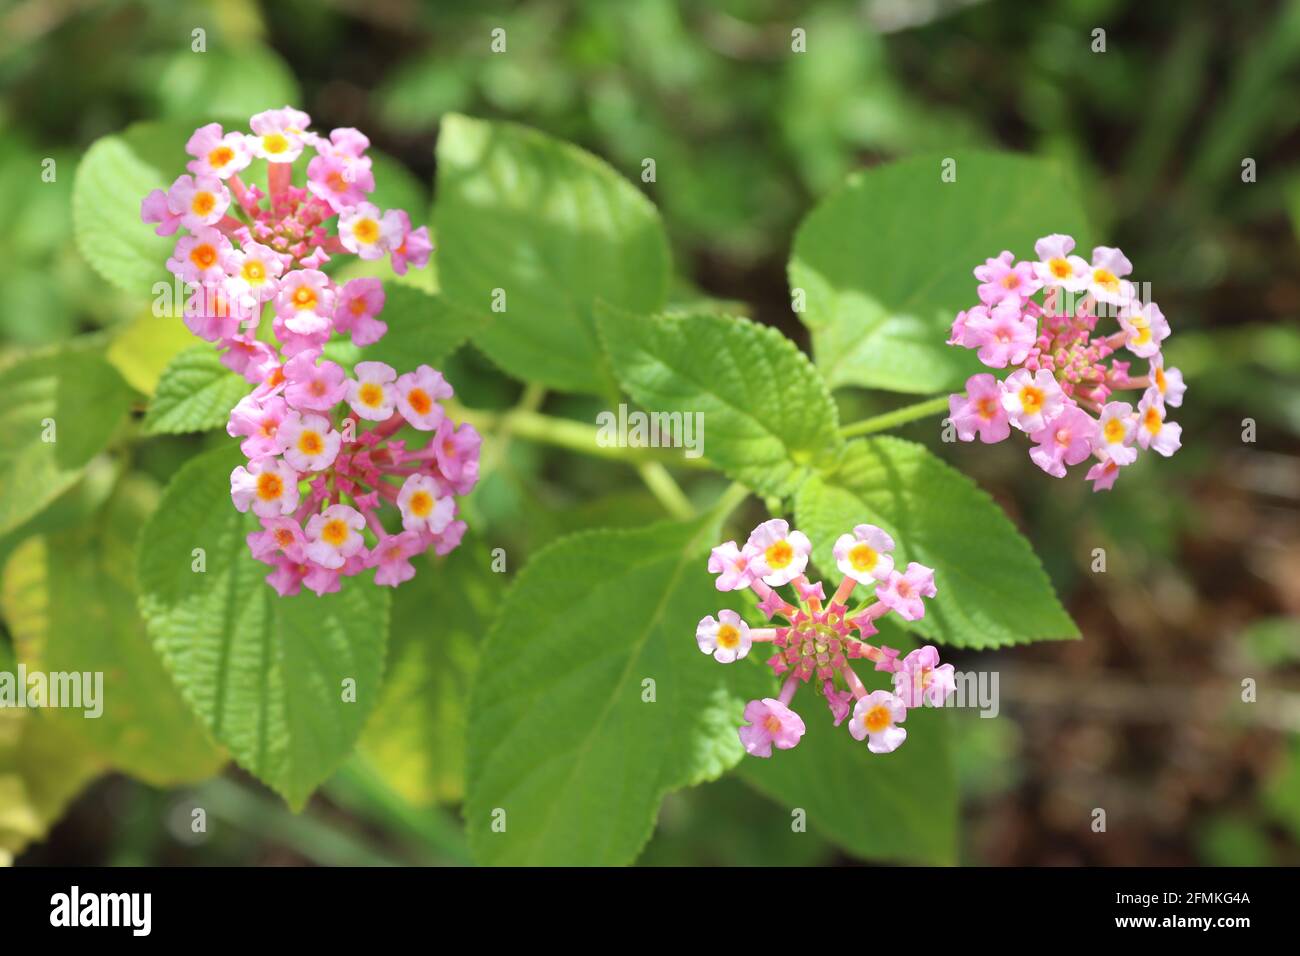 Lantana fleurit du Sri Lanka. Banque D'Images